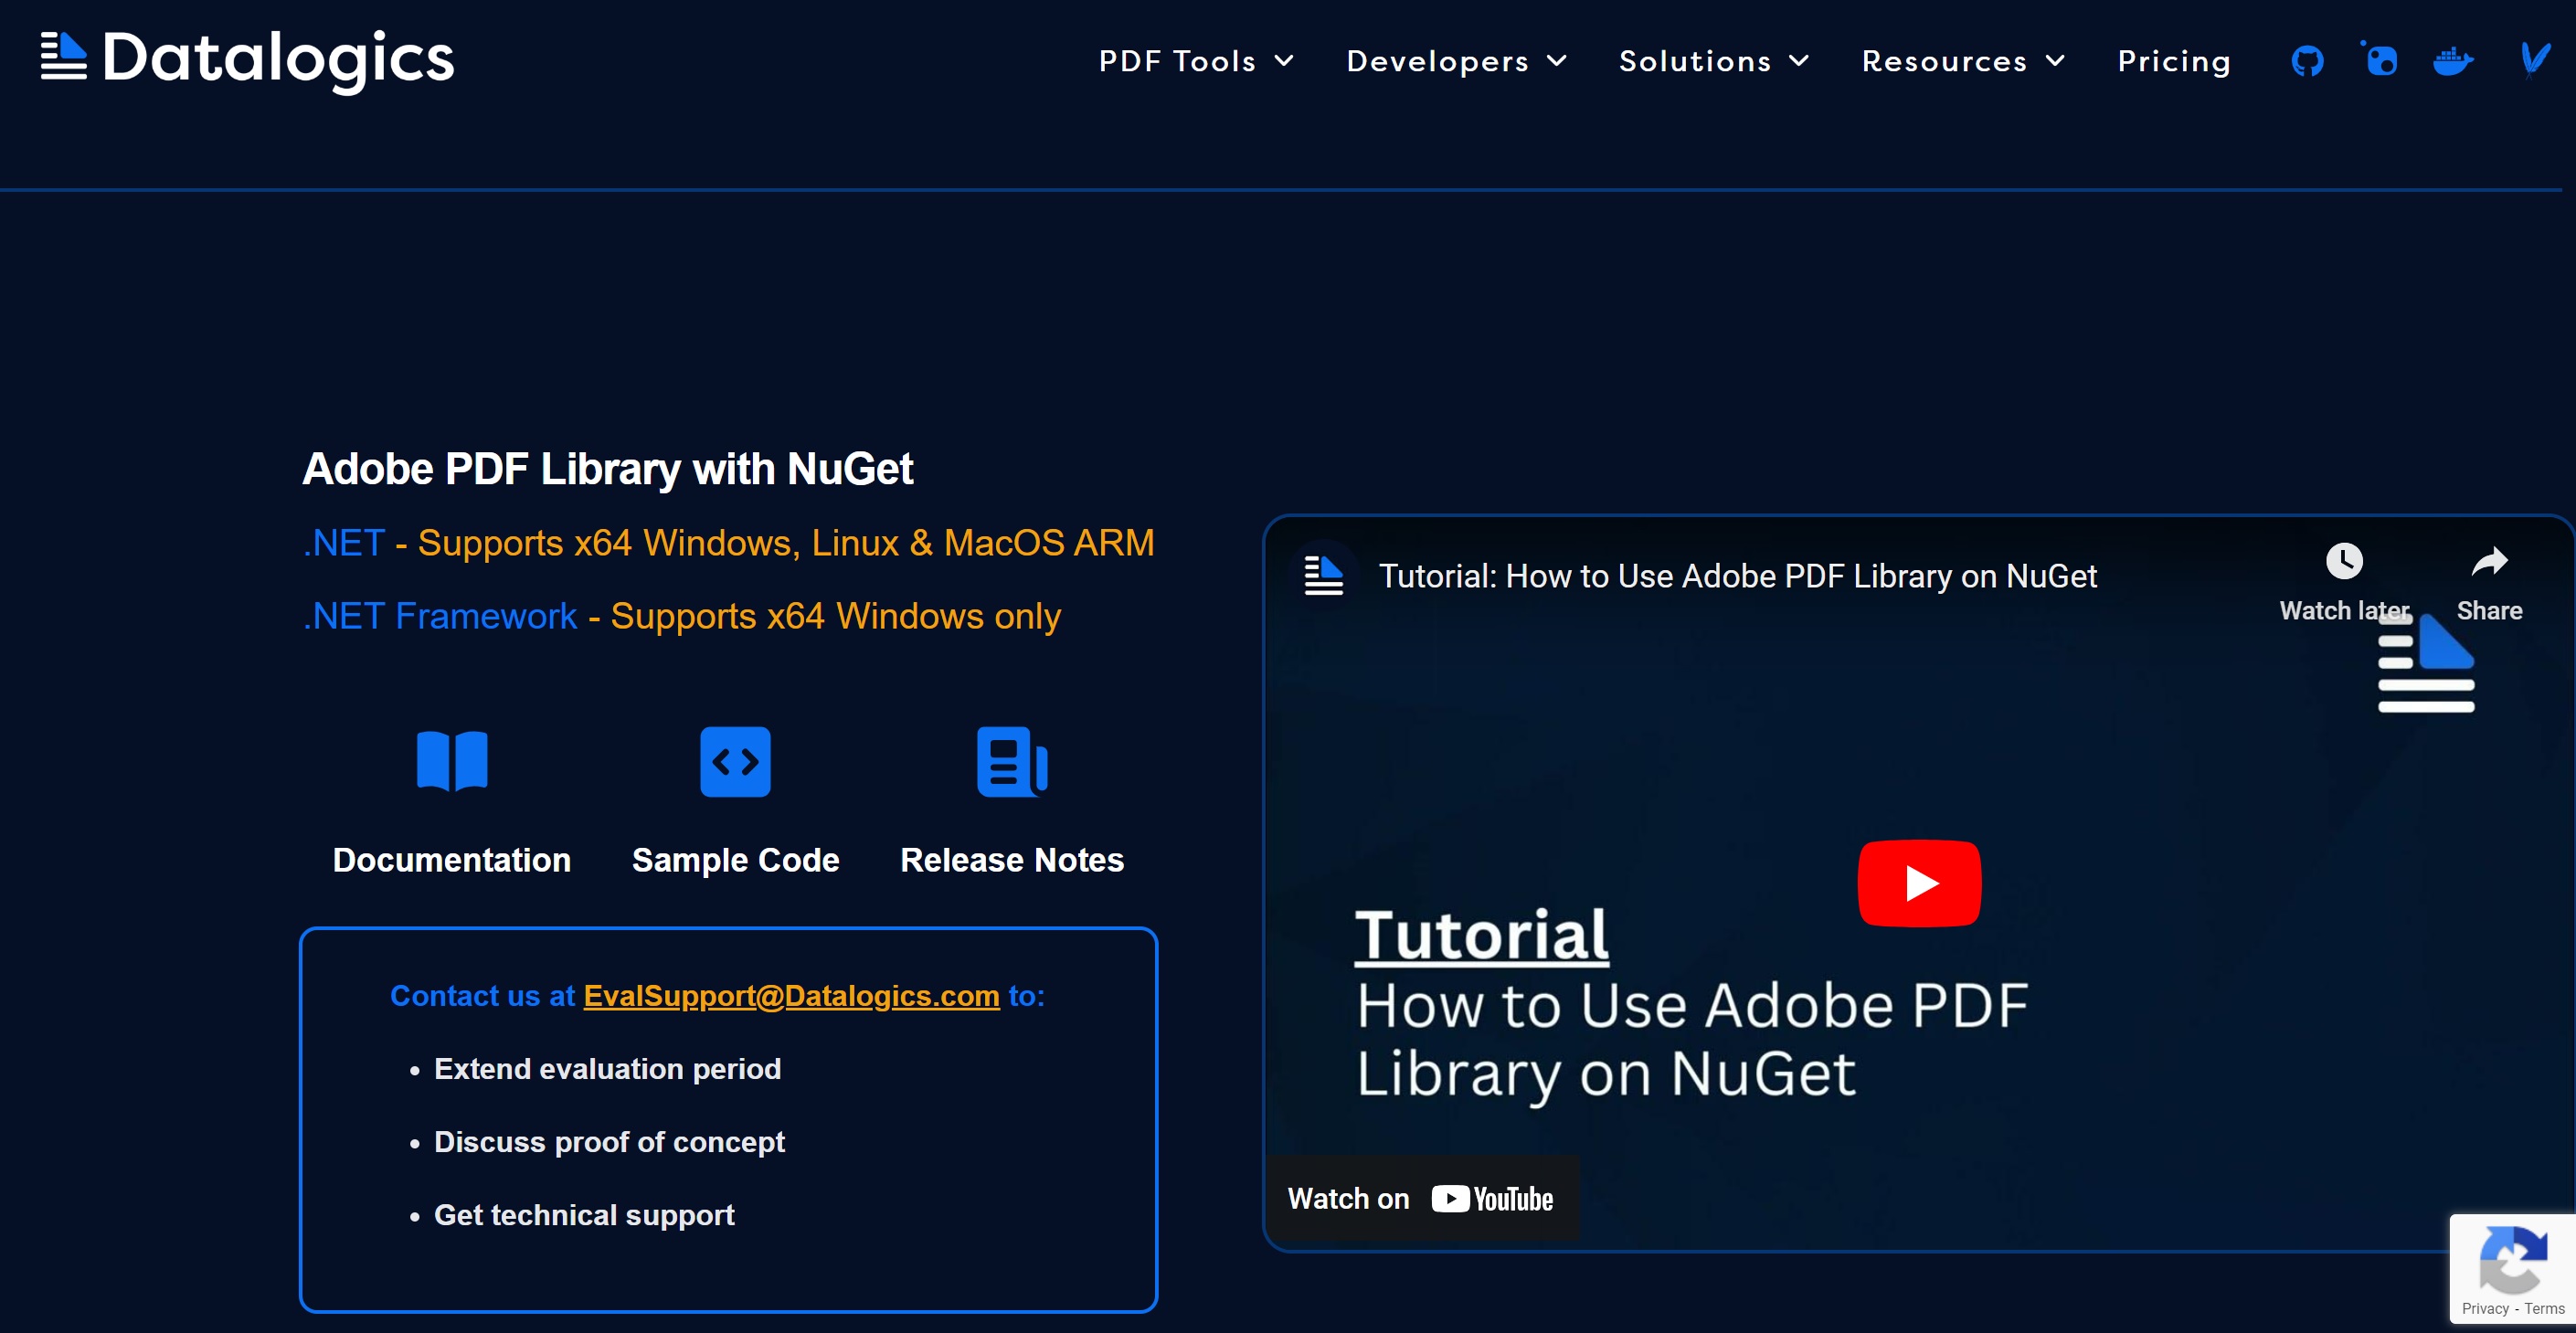 Adobe PDF Library - NuGet Tutorial & Get Started